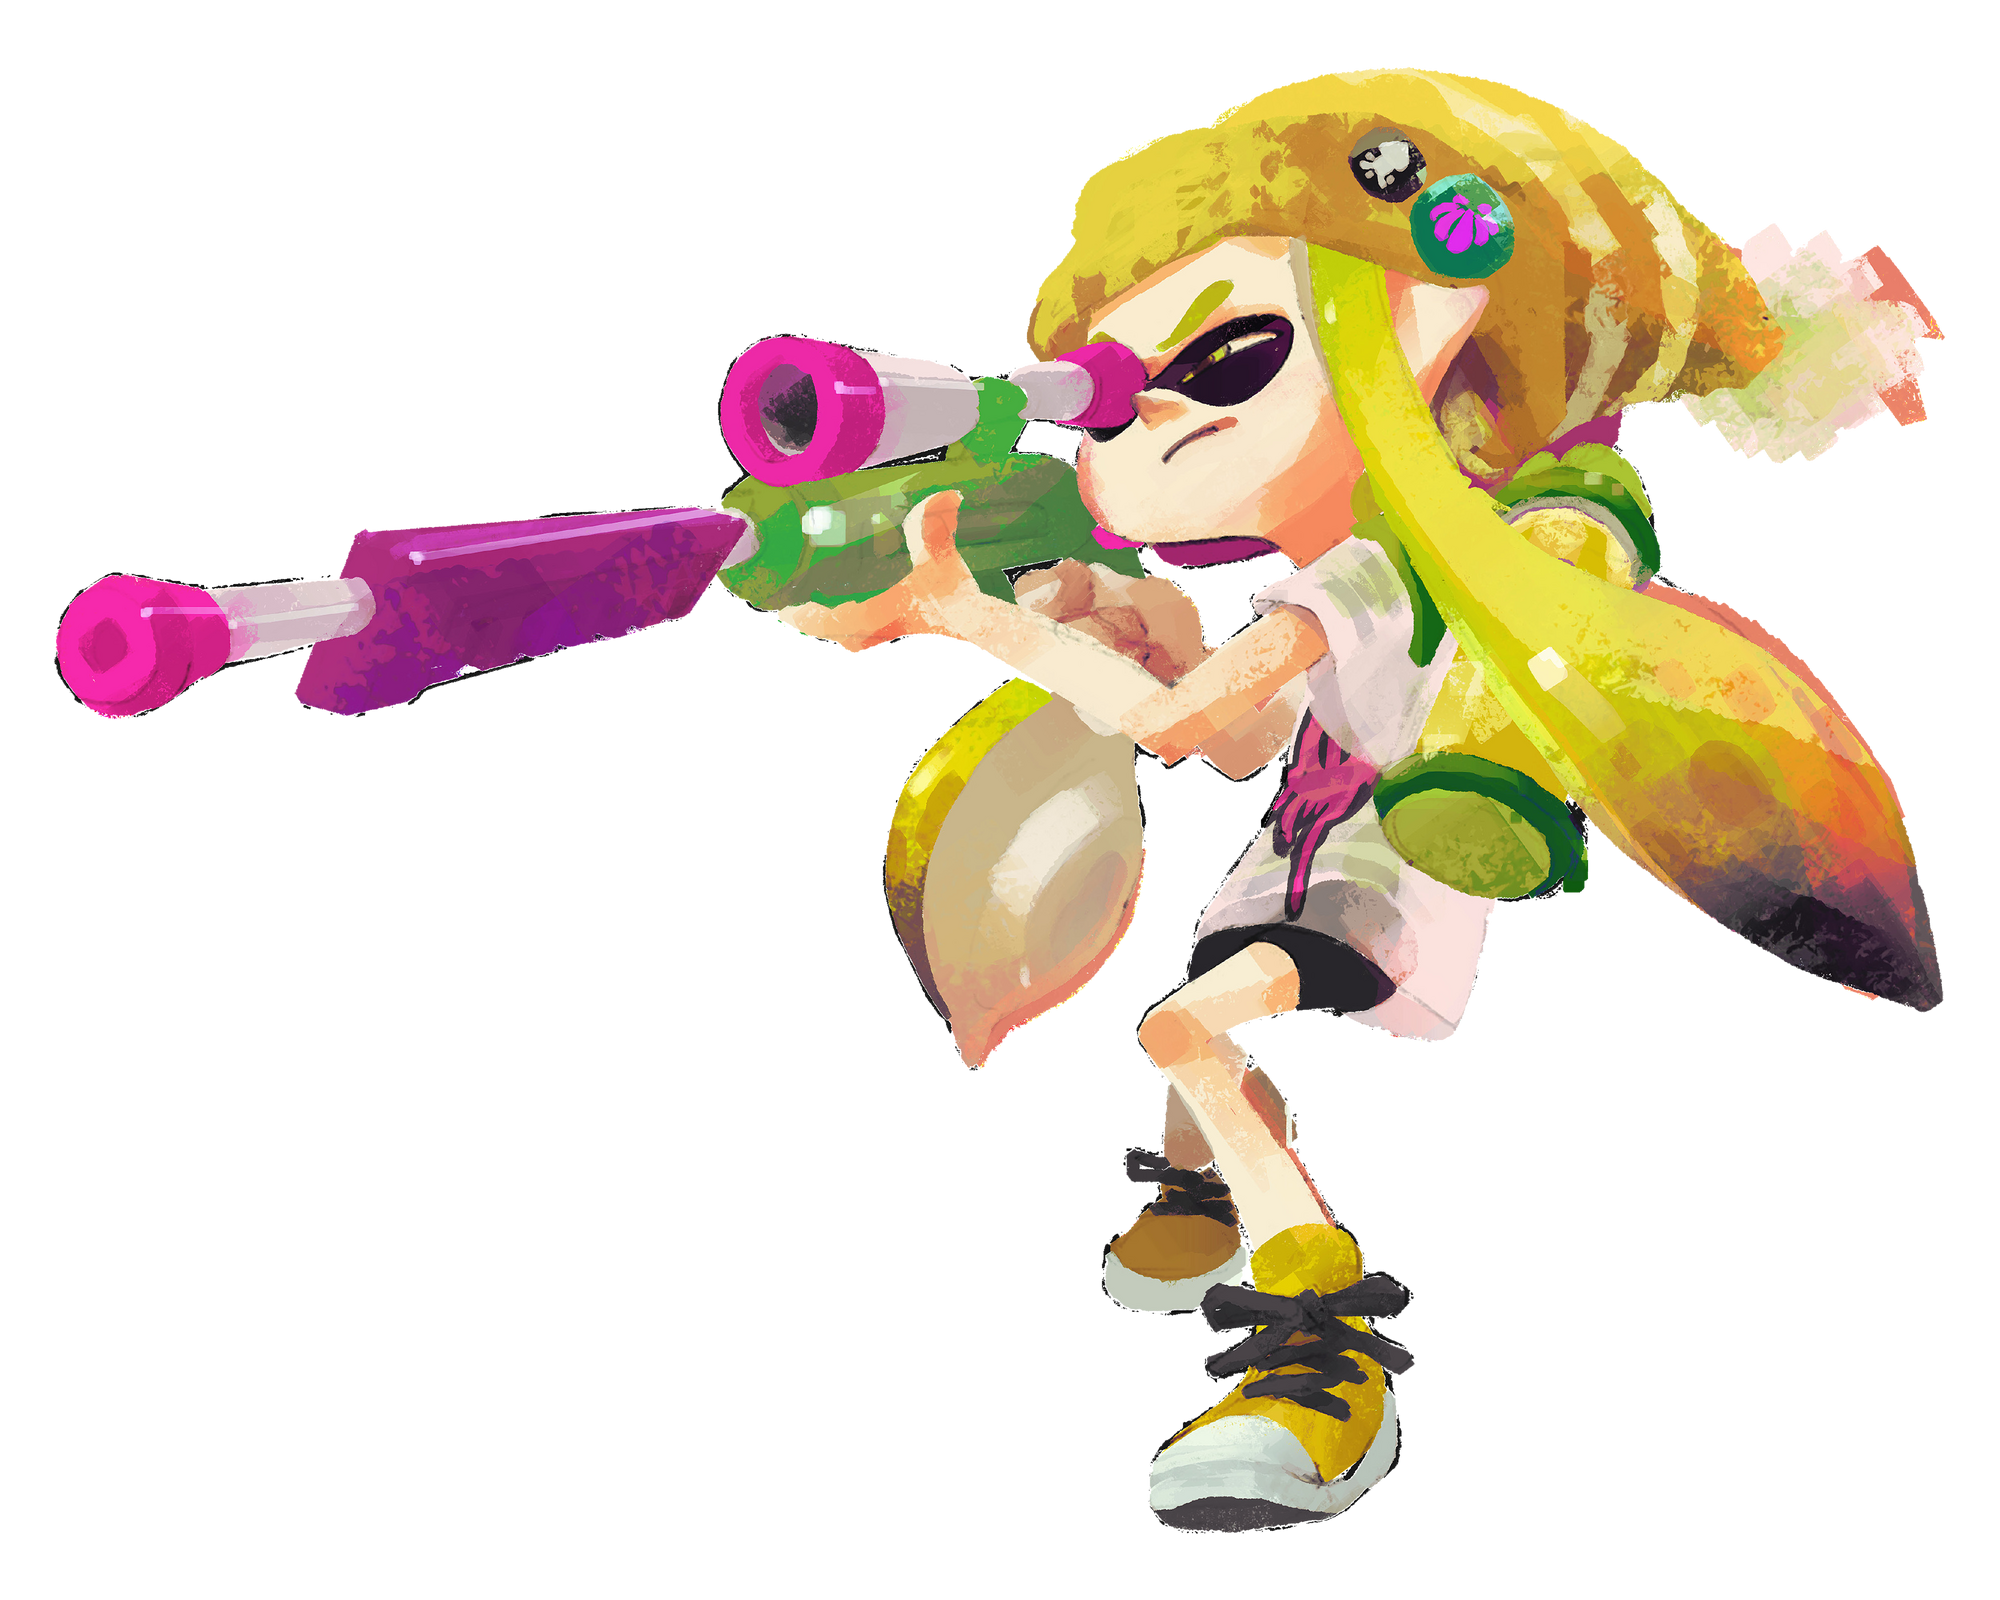 Image Inkling Sniperpng Fantendo Nintendo Fanon Wiki Fandom Powered By Wikia 7656